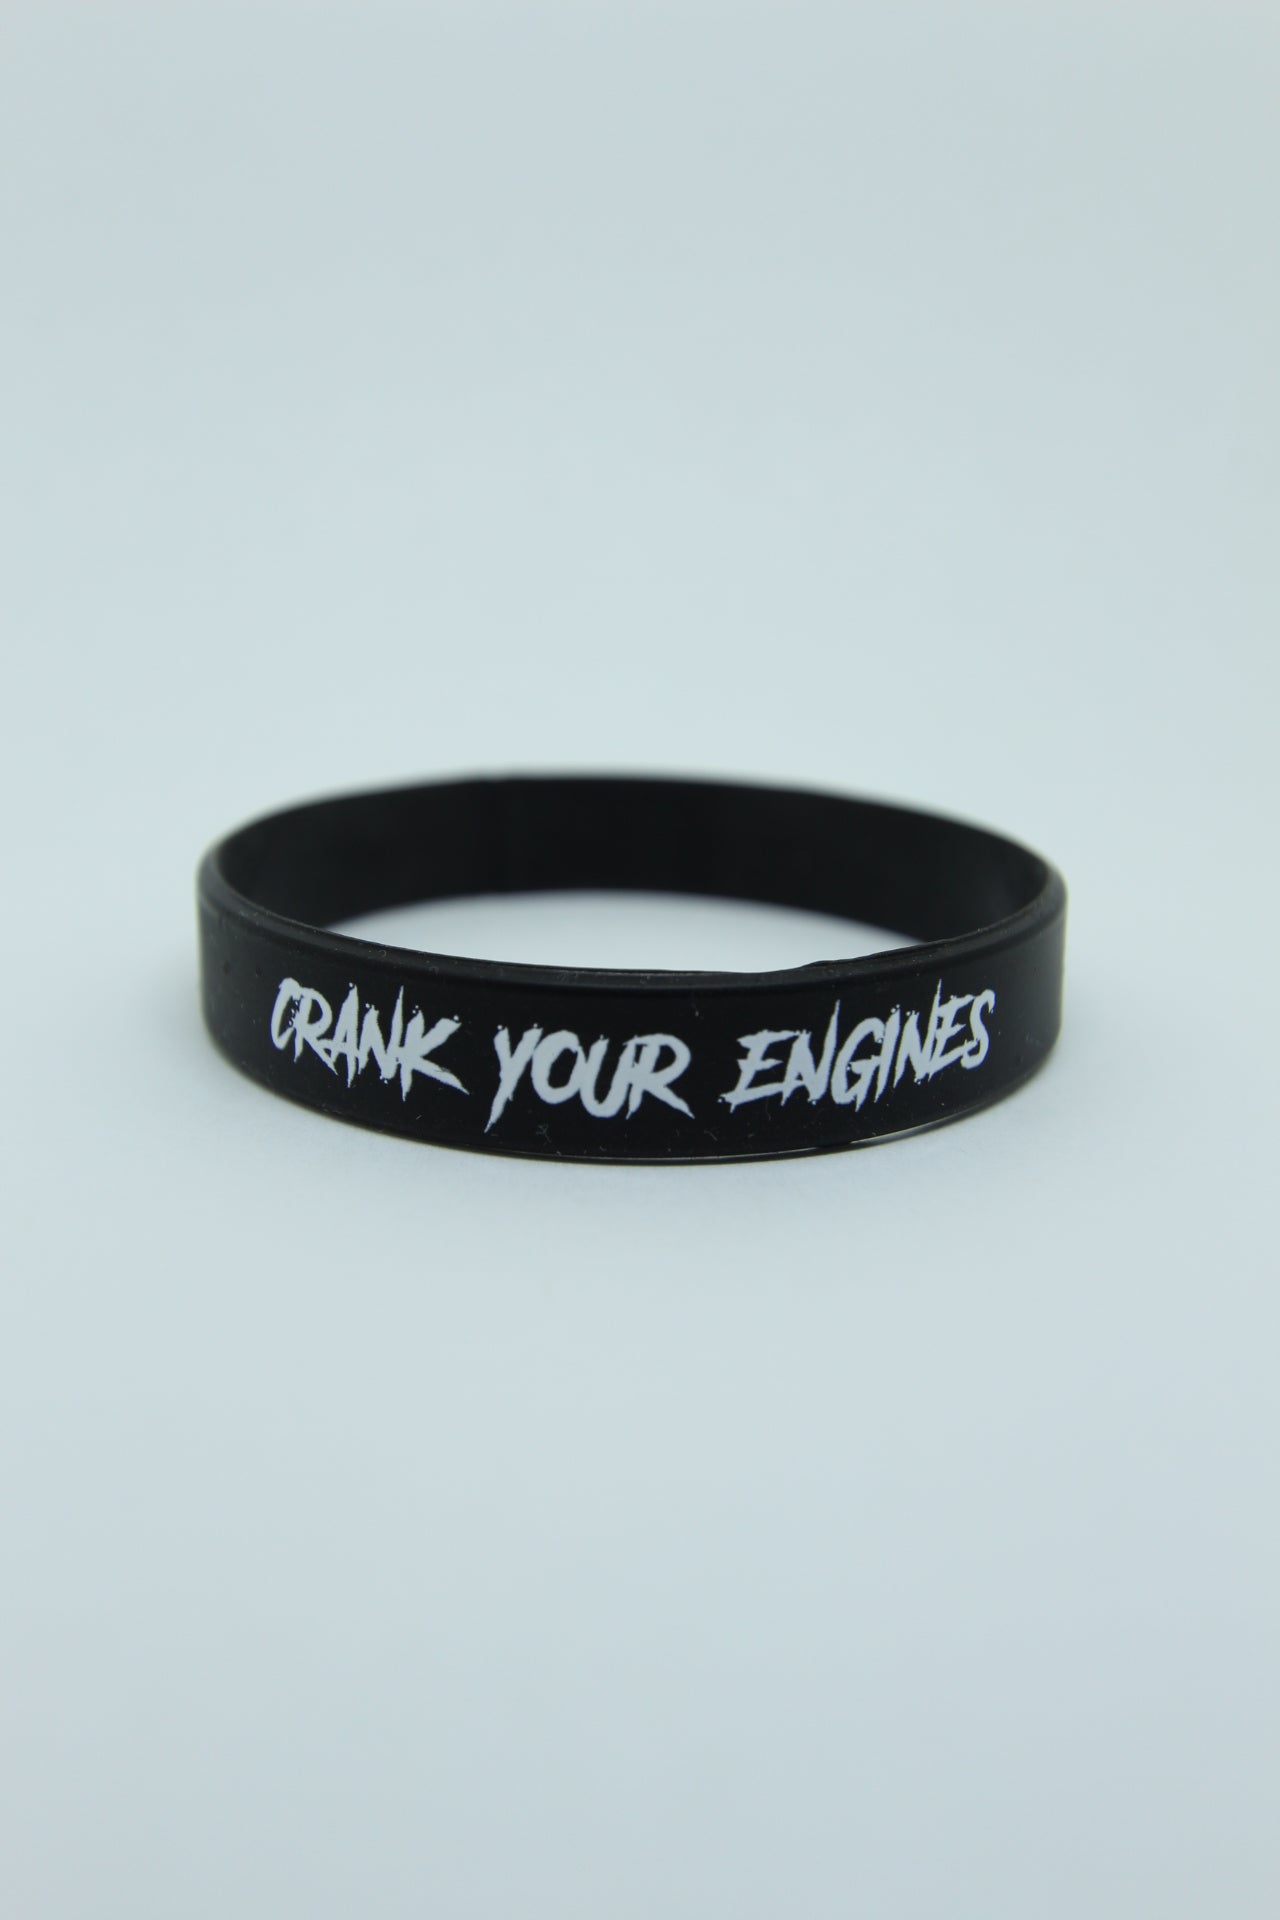 ImportWorx Crank Your Engines Wristband